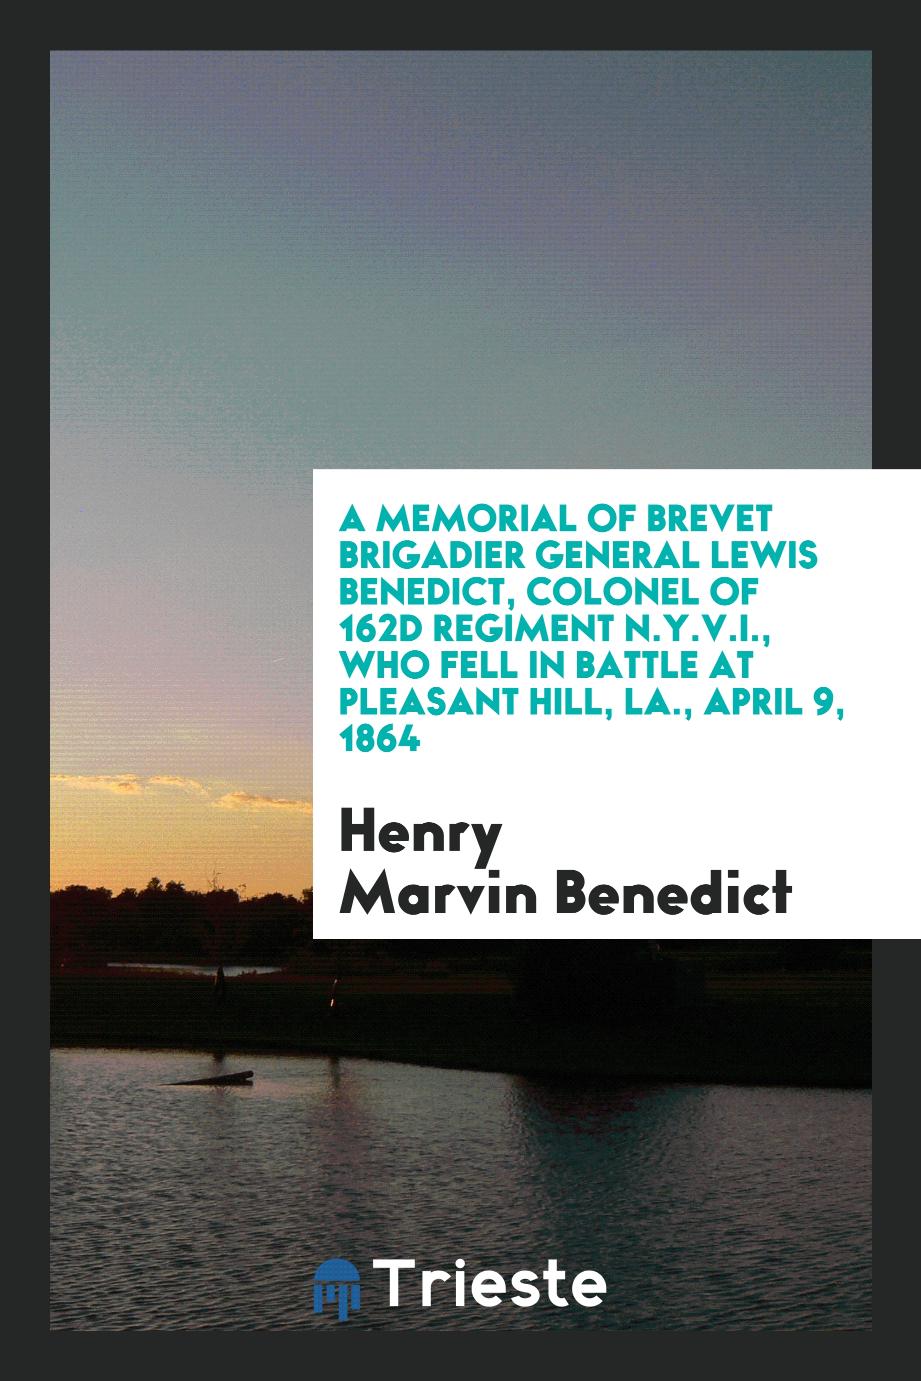 A Memorial of Brevet Brigadier General Lewis Benedict, Colonel of 162d Regiment N.Y.V.I., Who Fell in Battle at Pleasant Hill, LA., April 9, 1864